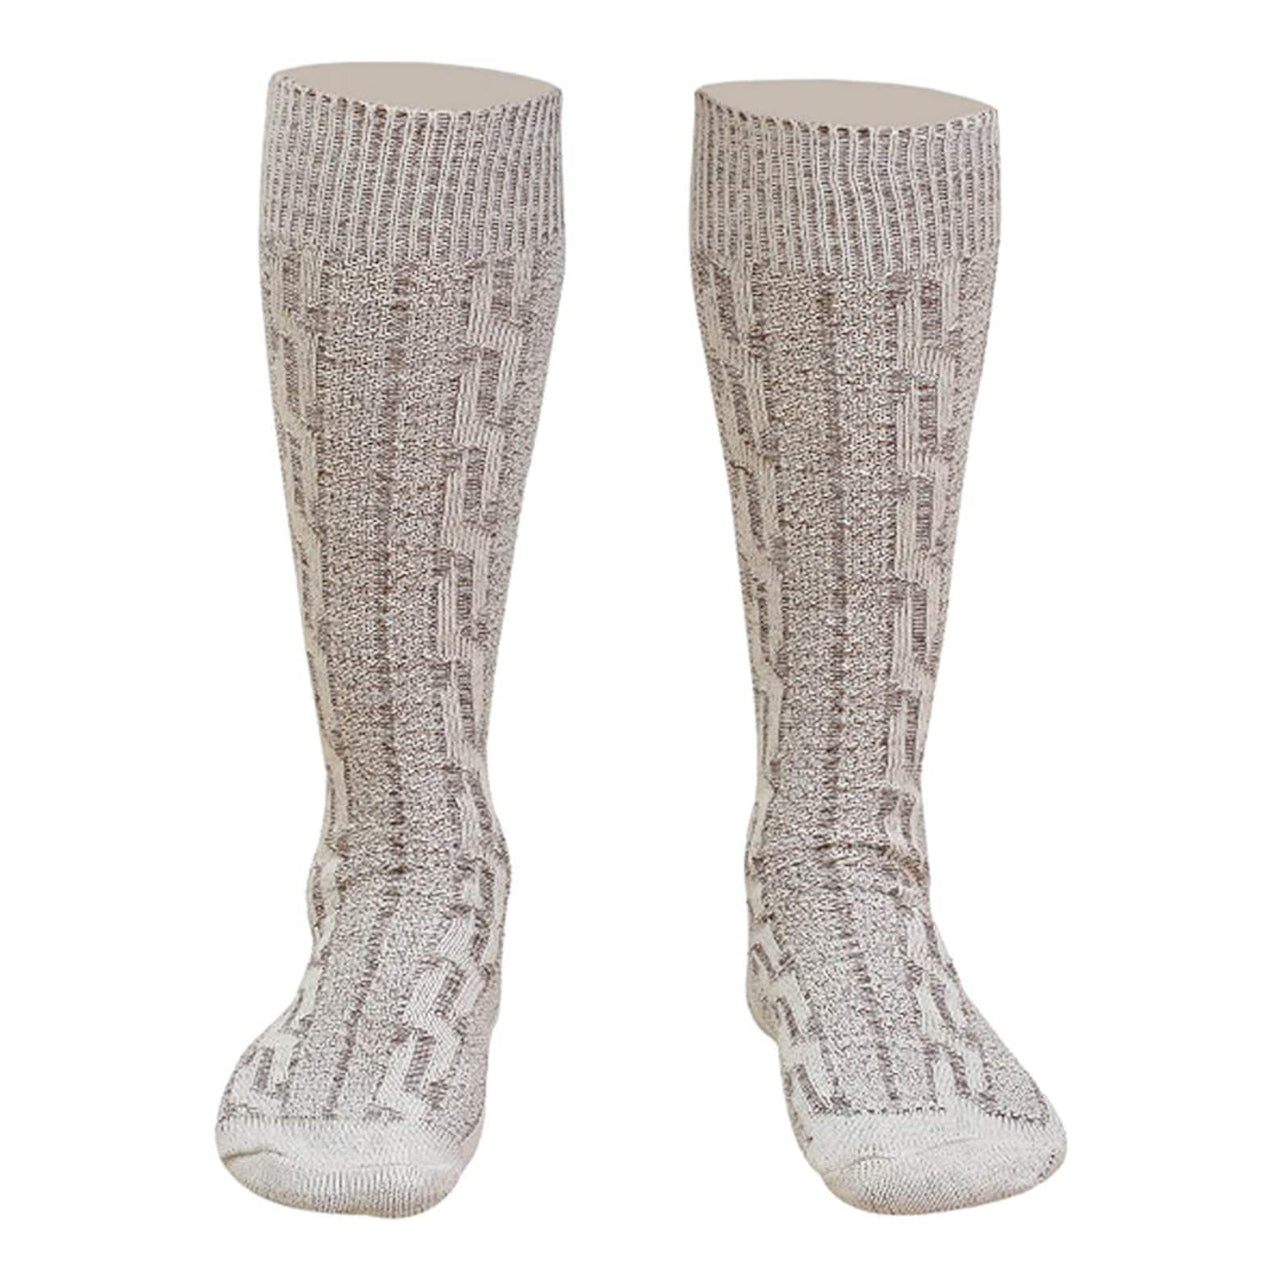 Mens Bavarian Socks Classic Oktoberfest Costume Lederhosen Cotton Socks German Outfit Socks